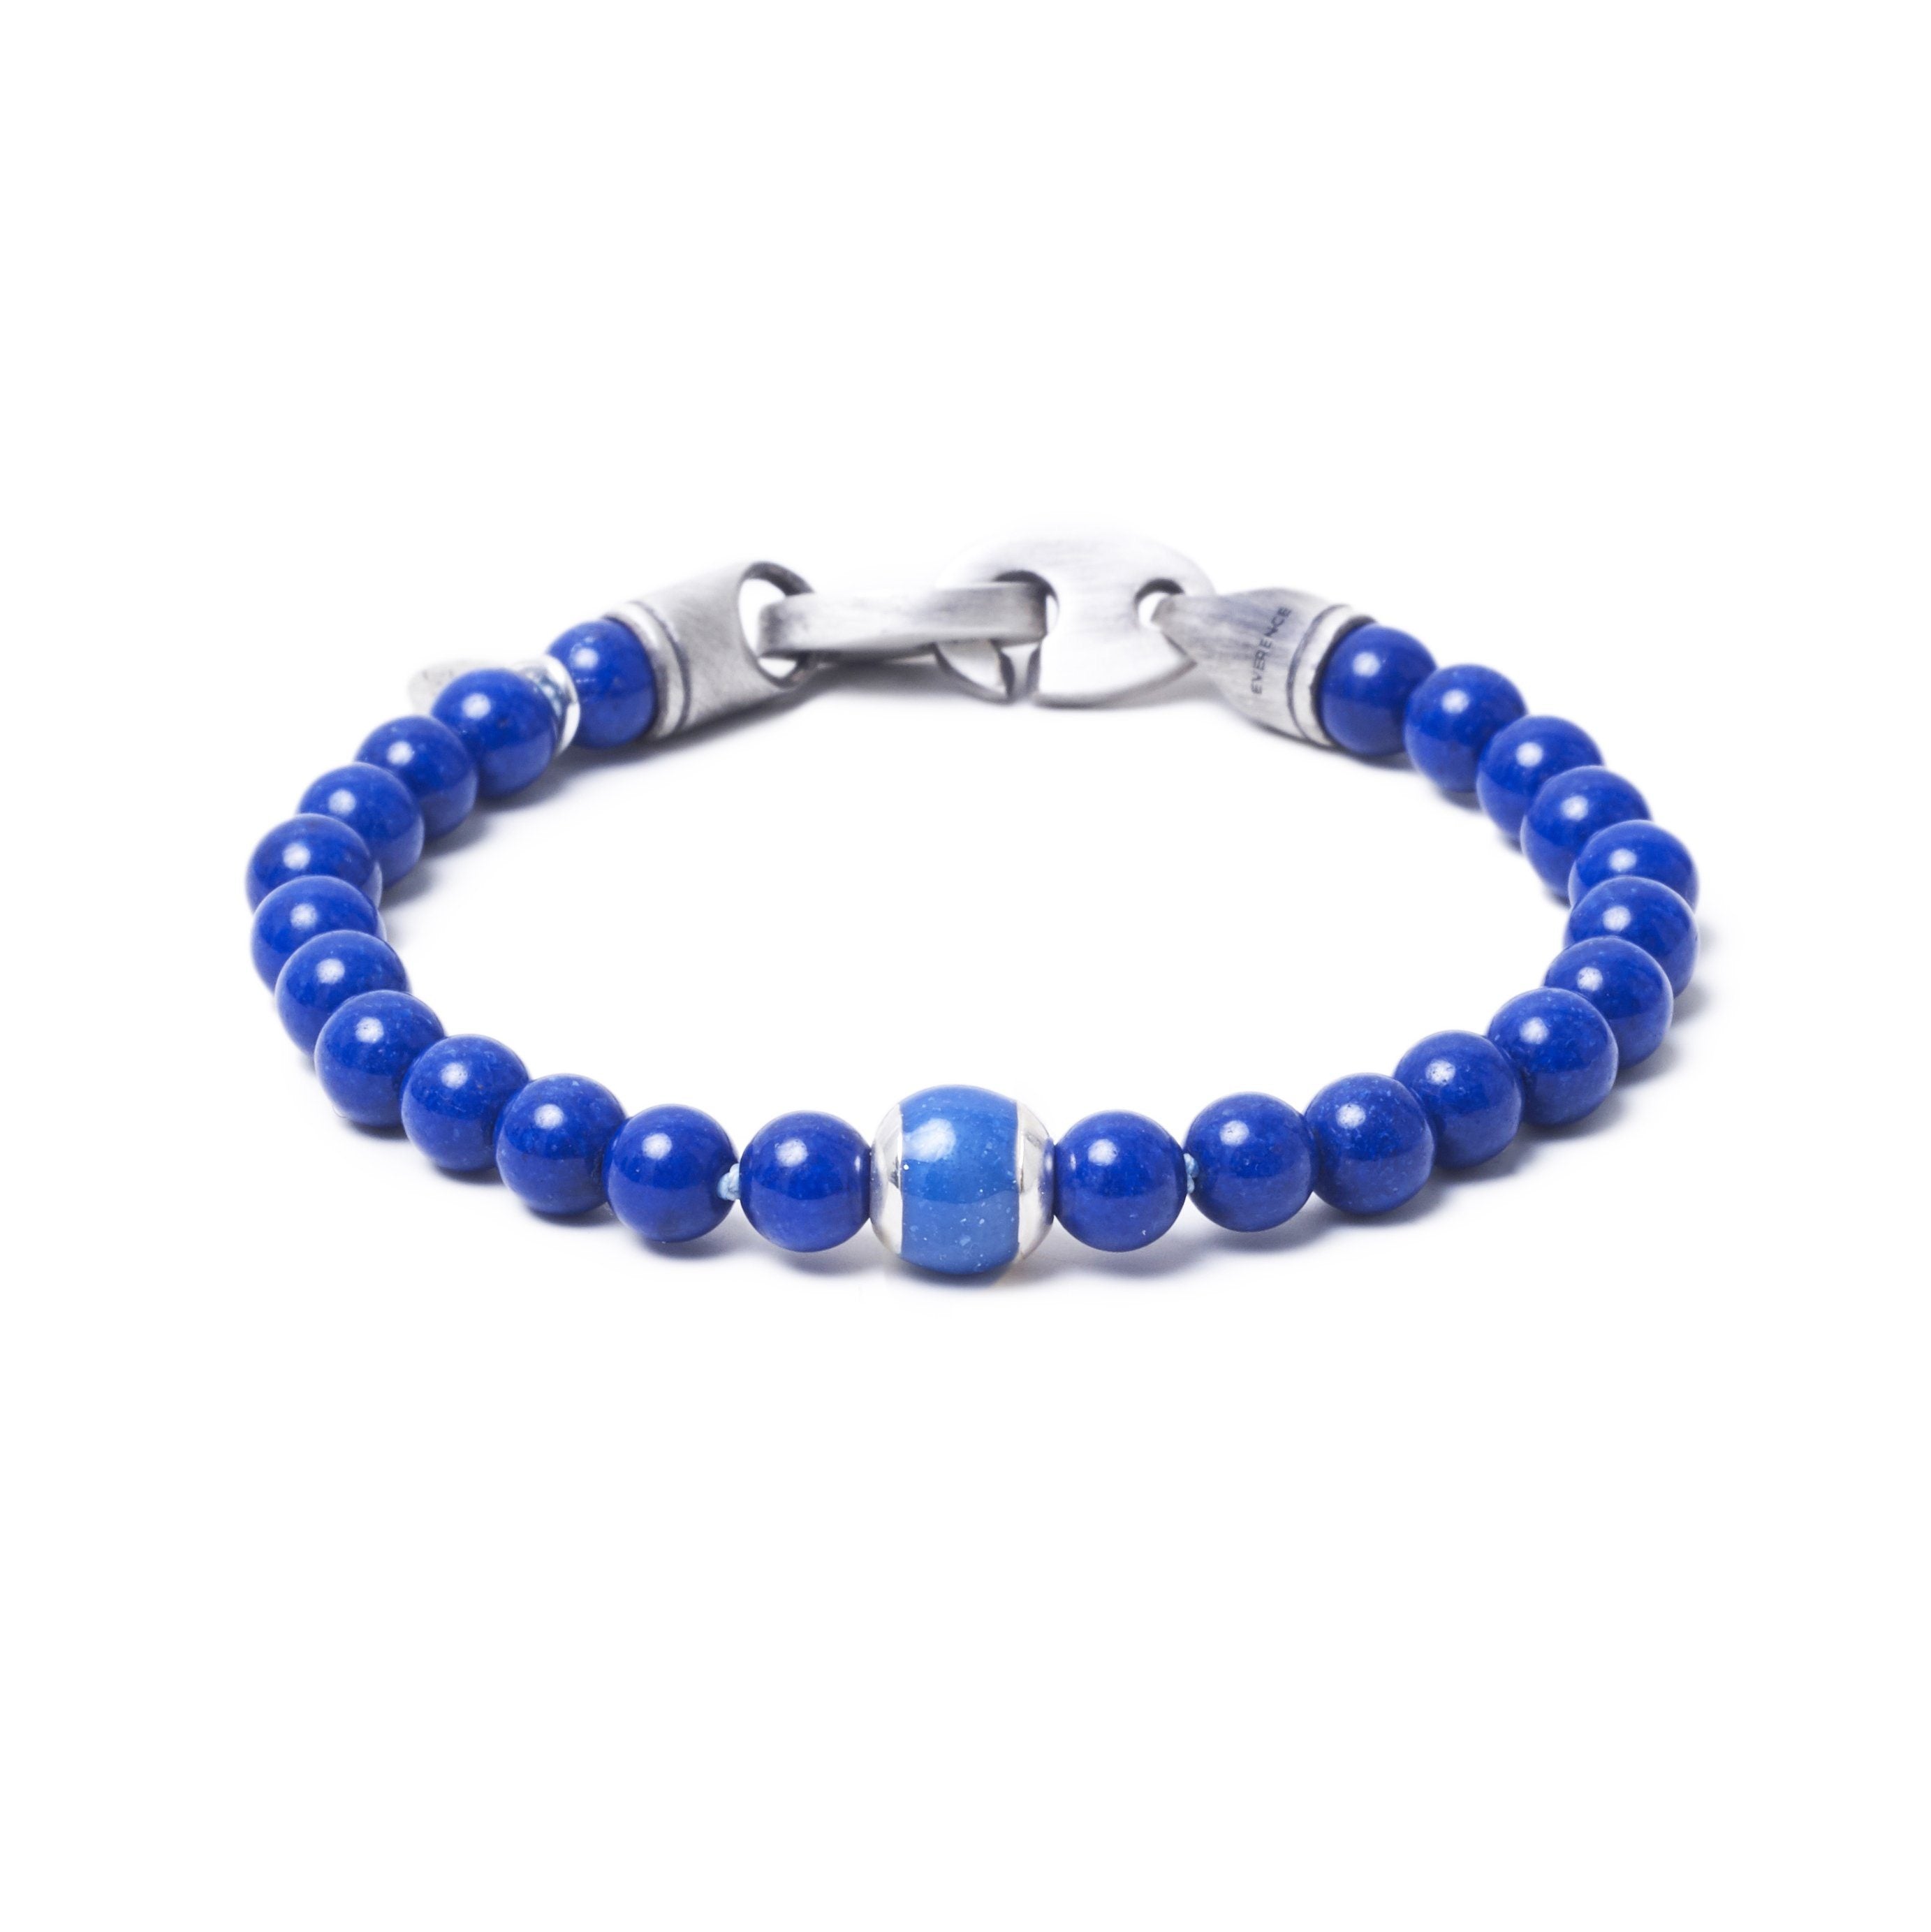 Lapis Lazuli, One Everence Bead everence.life Blue Brummel Hook 7